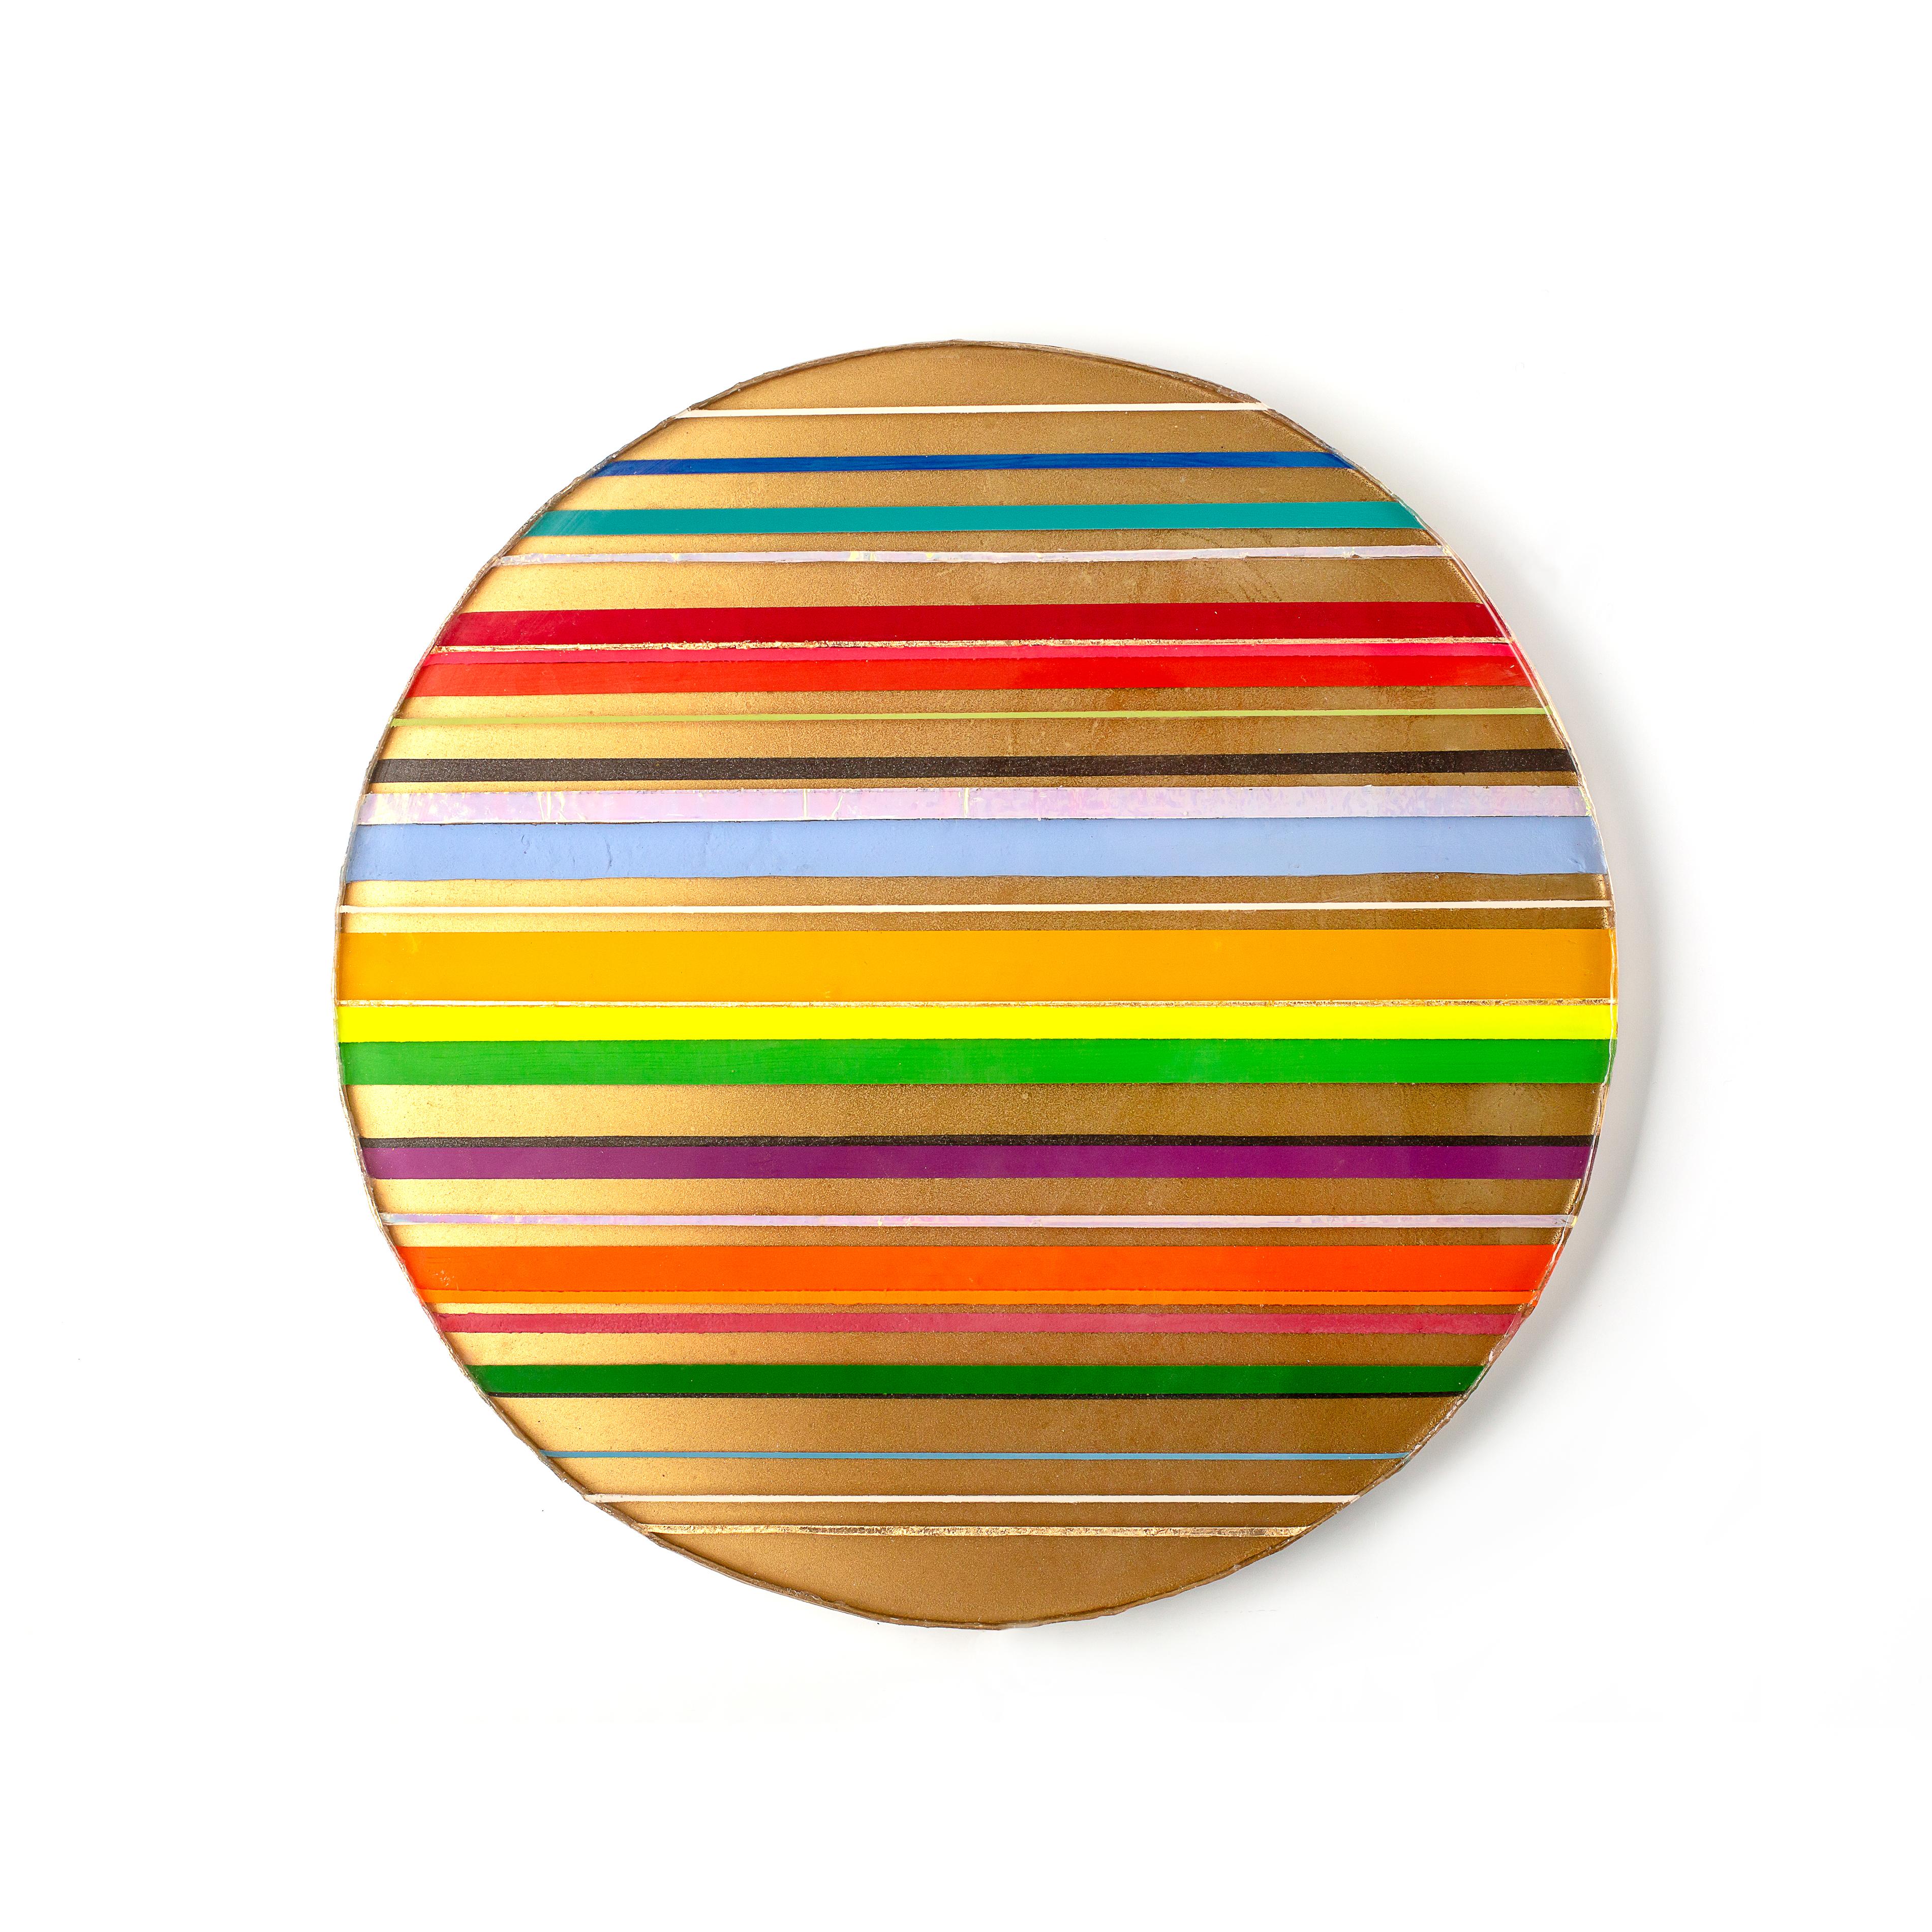 Candy stripes - Geometric Abstract Circle Resin Multicolored Wall Art - Mixed Media Art by Yulia YUVO Volosenok